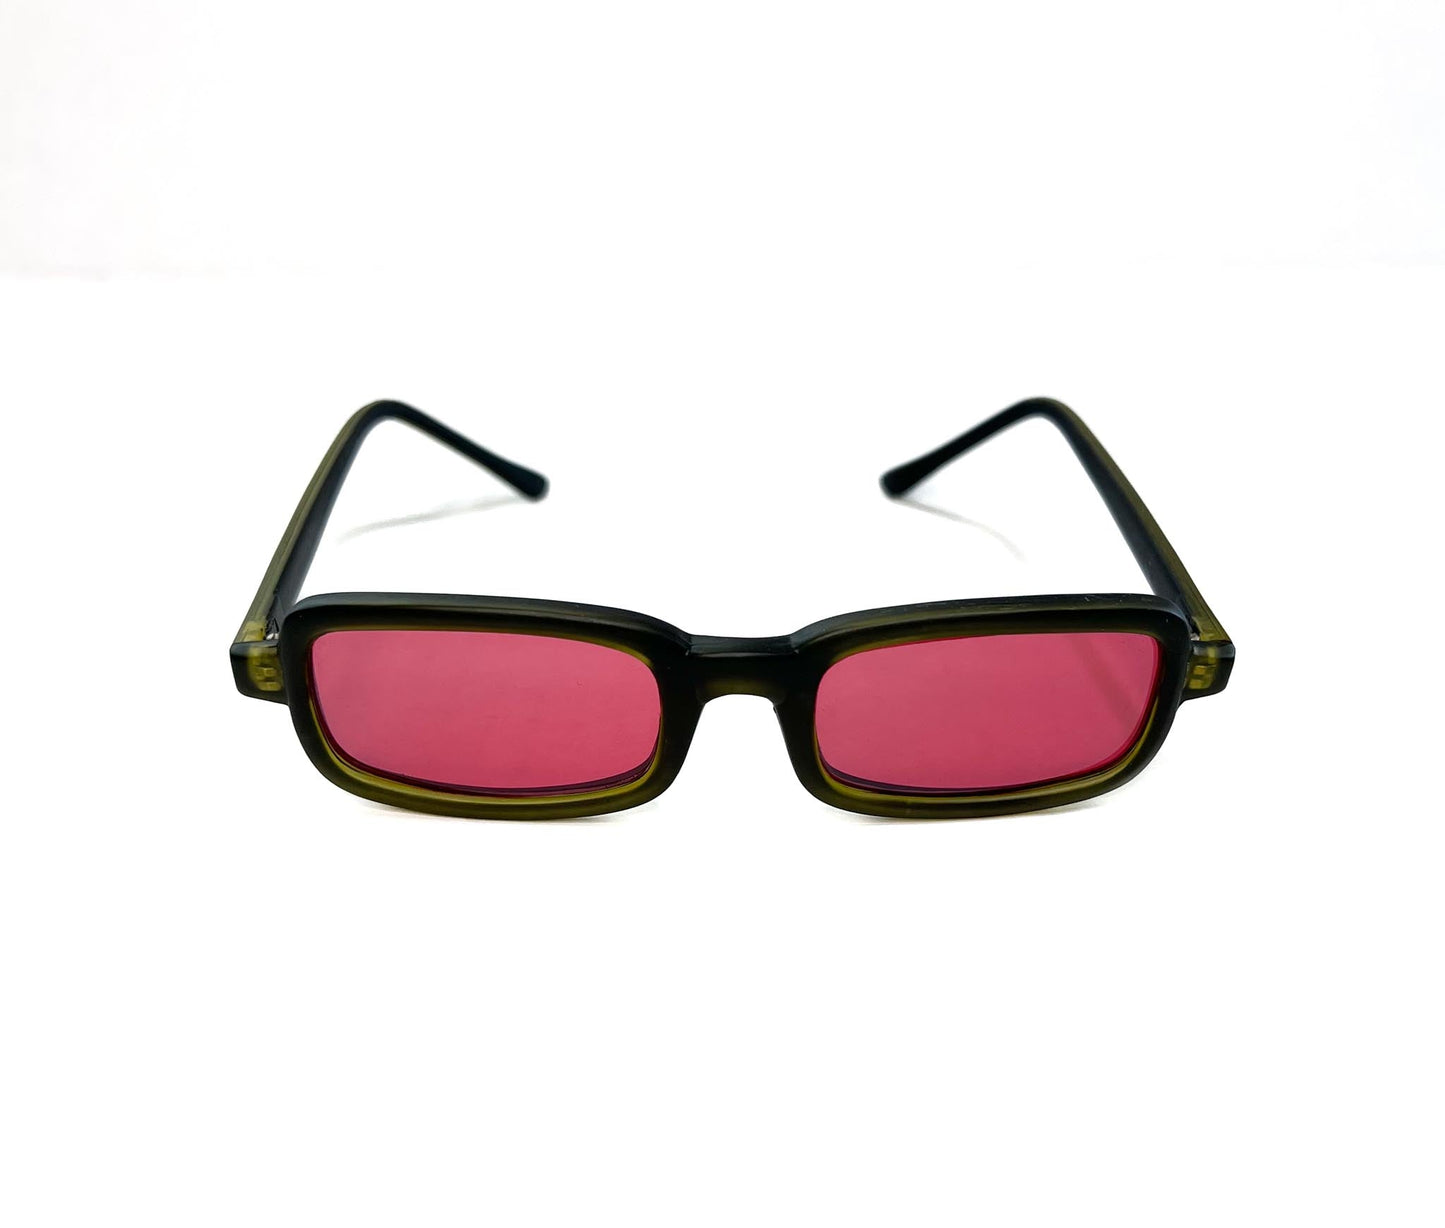 SX Square pink retro sunglasses with dark yellow handle